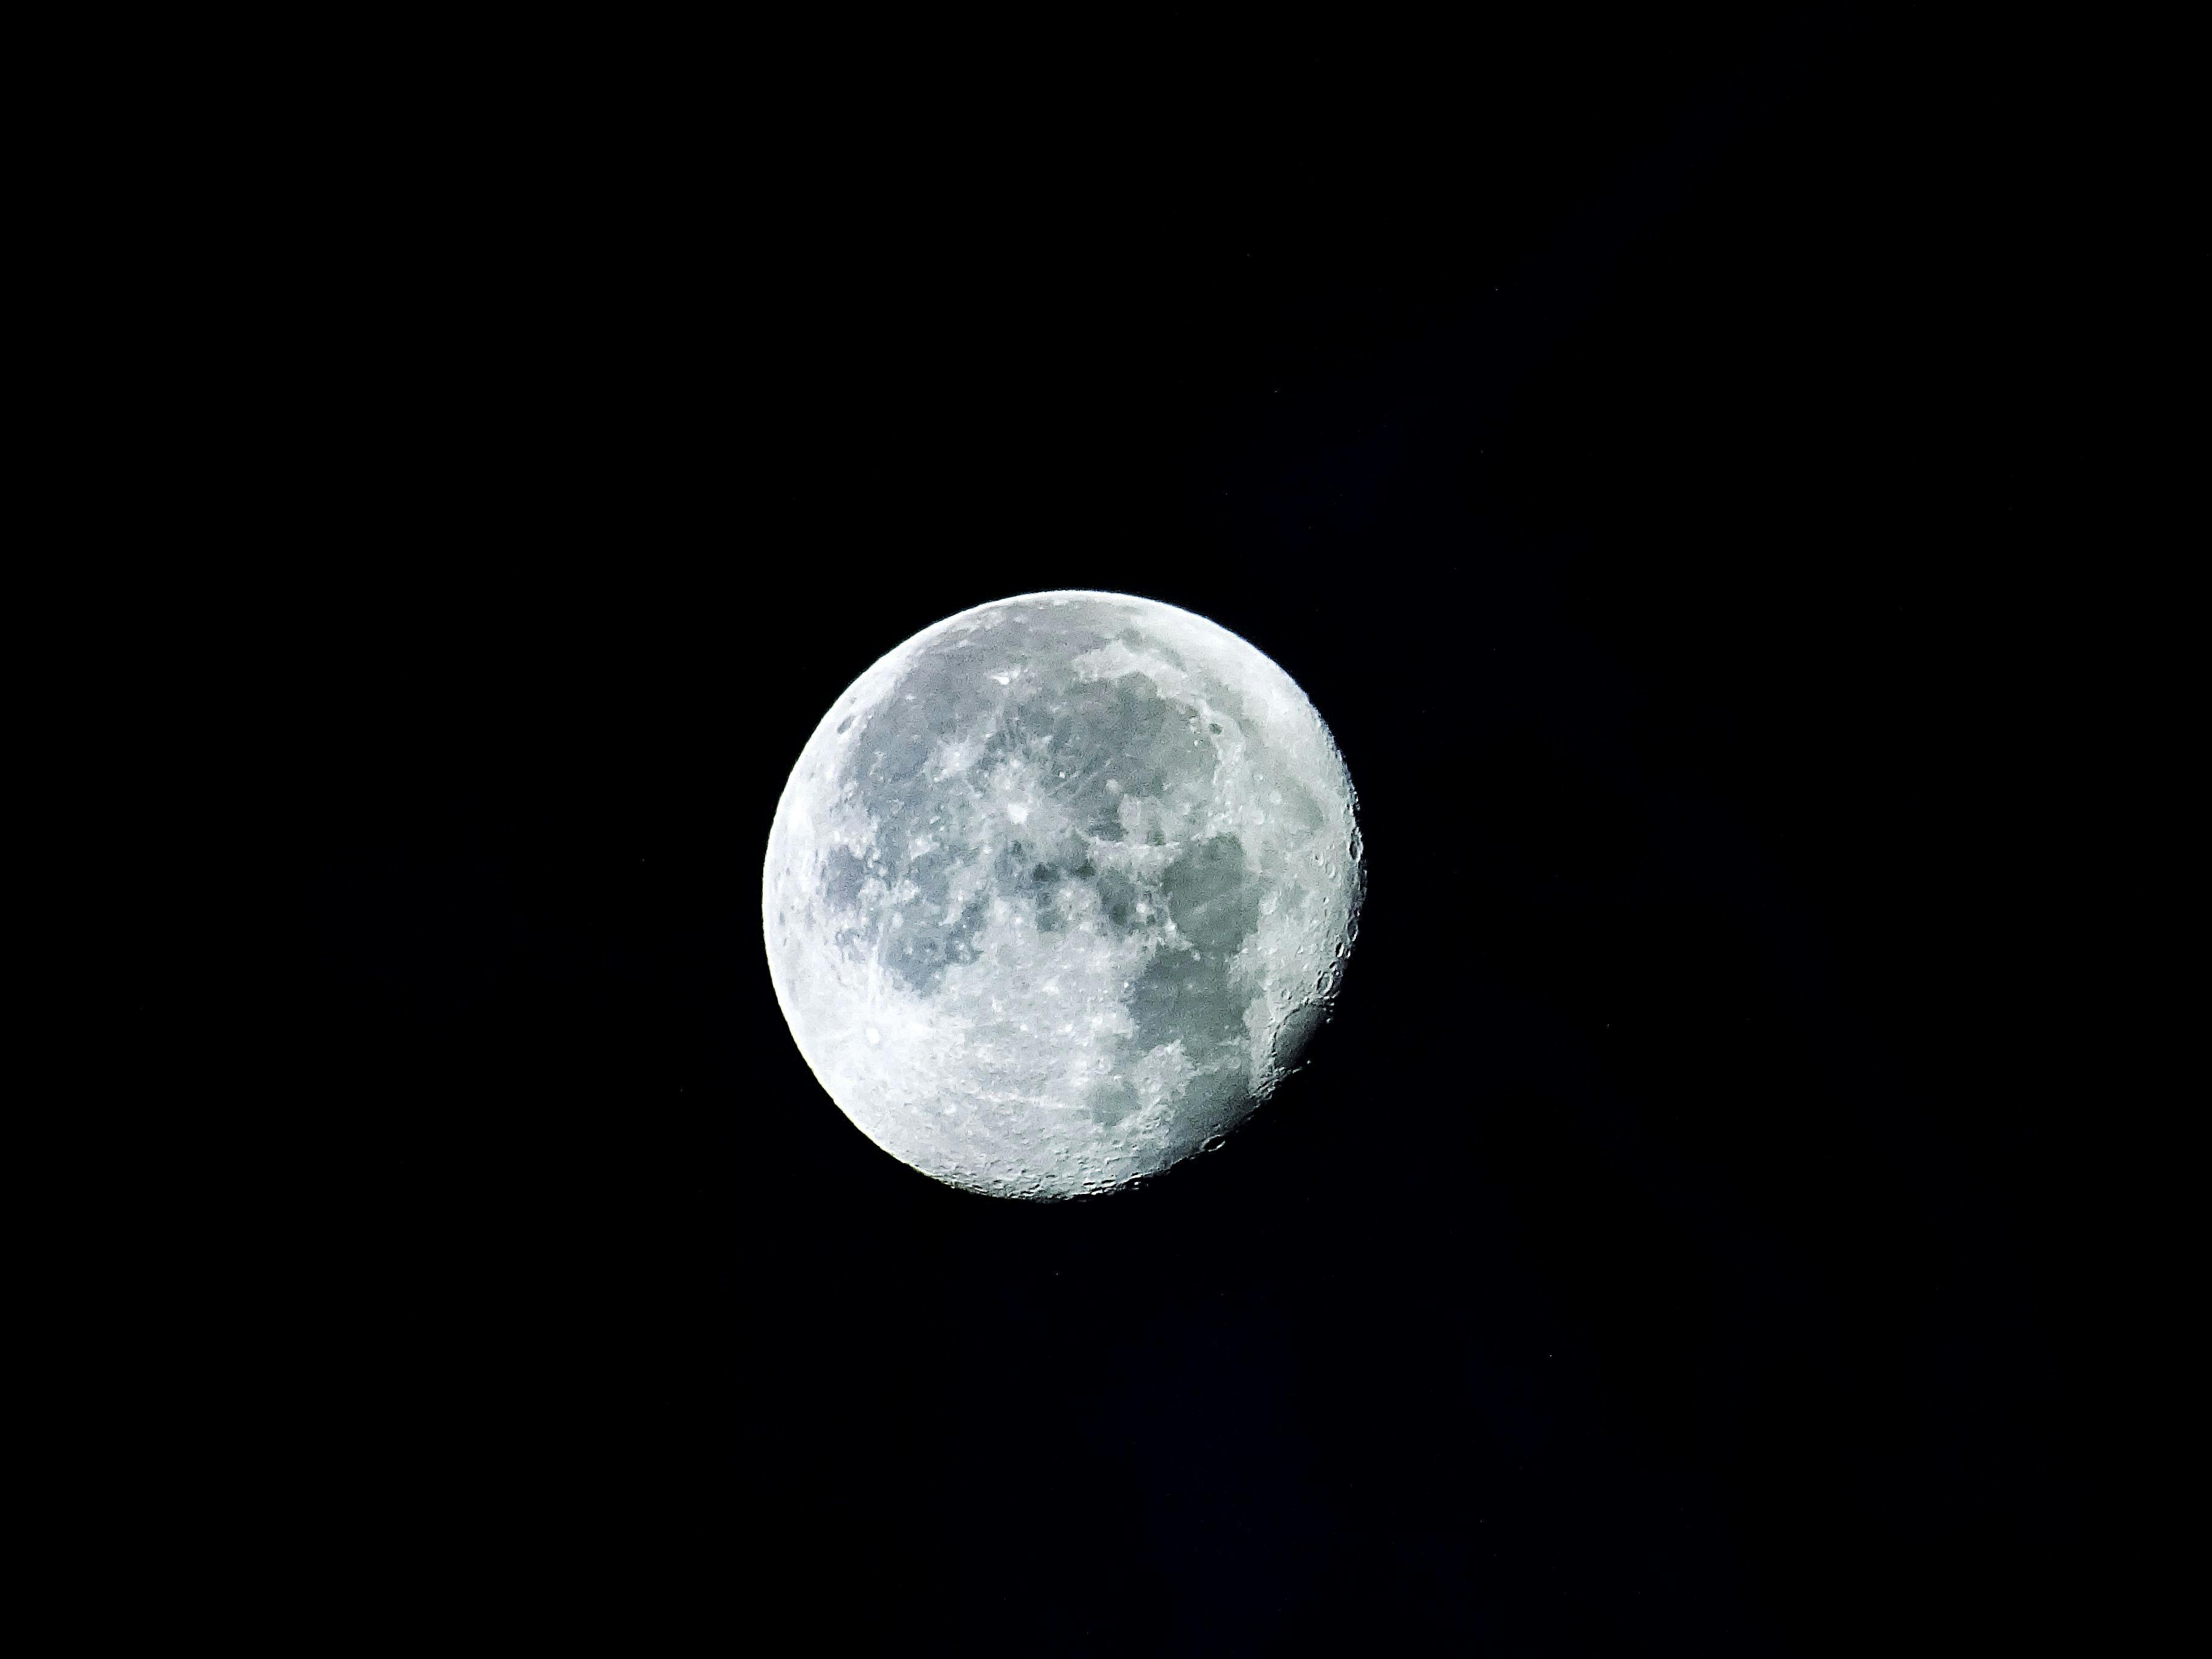 Moon Photography · Free Stock Photo